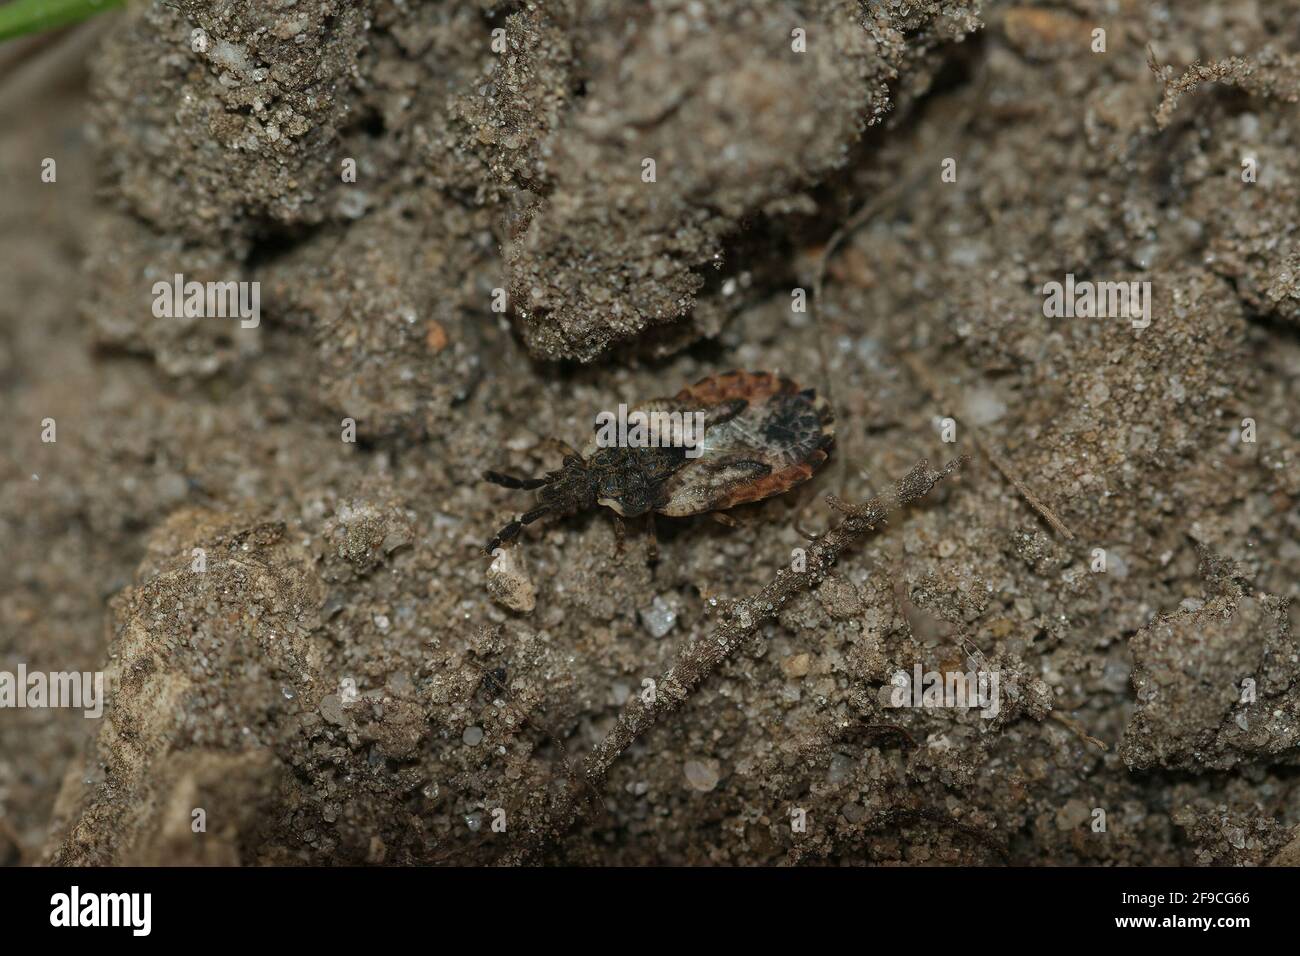 Closeup of a small common flatbug (Aradus depressus) on the soil Stock Photo